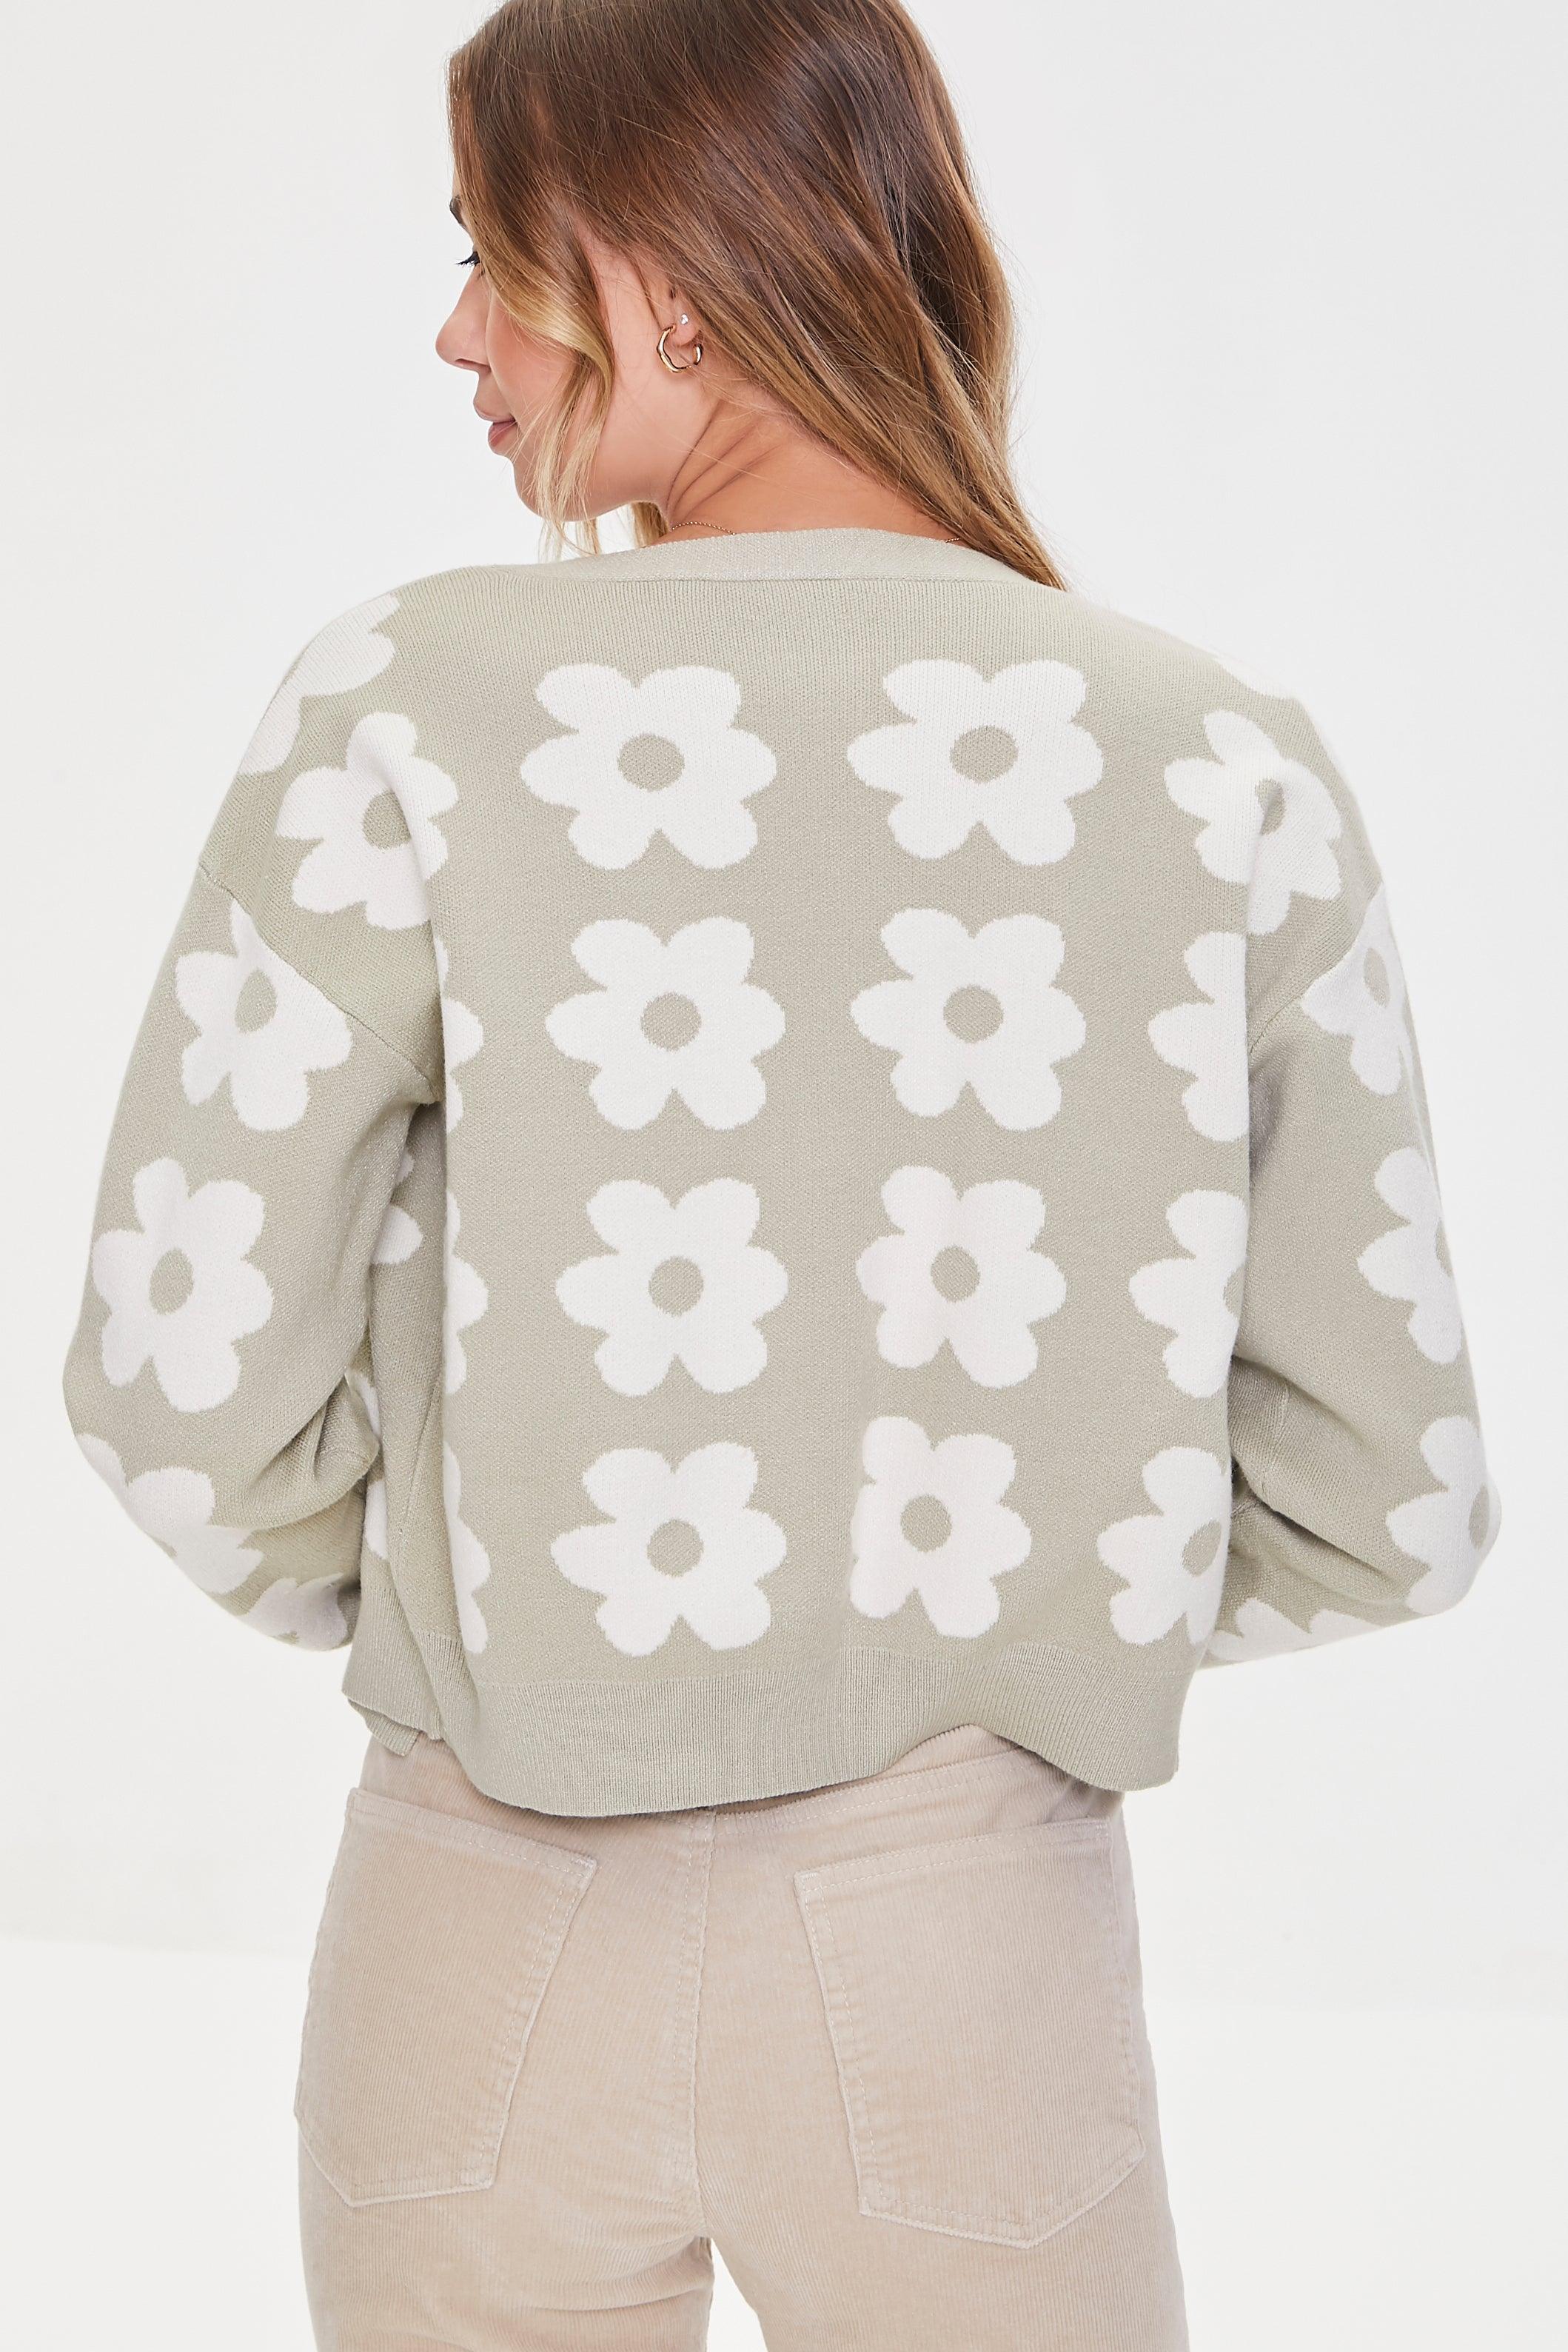 Sagecream Floral Print Cardigan Sweater 4